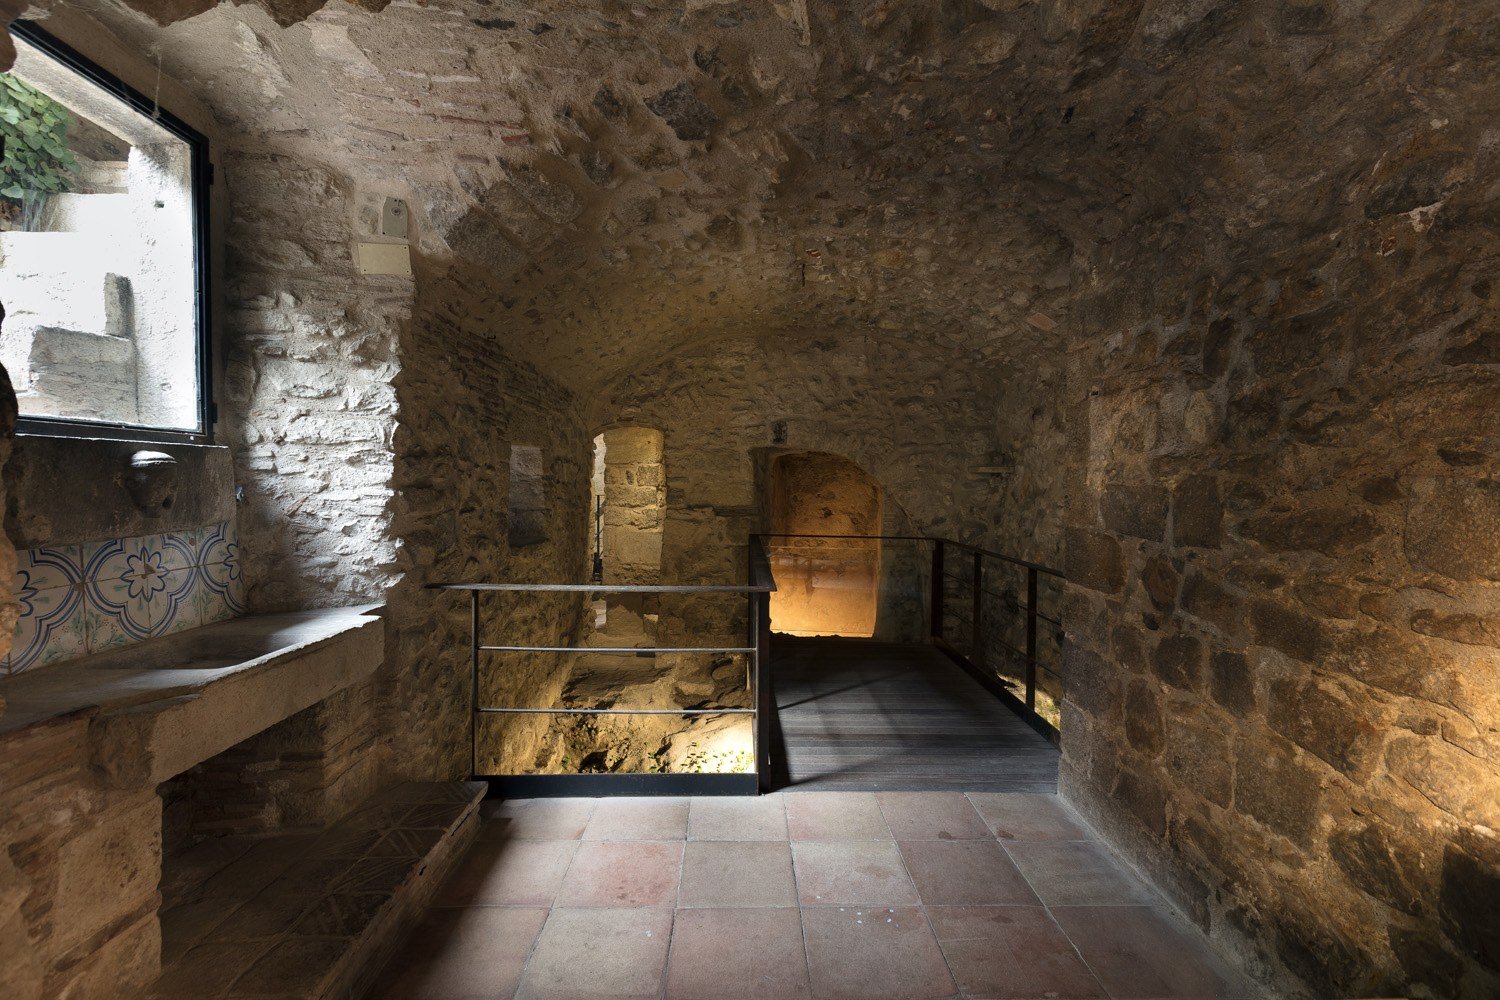 The Girona Mikveh